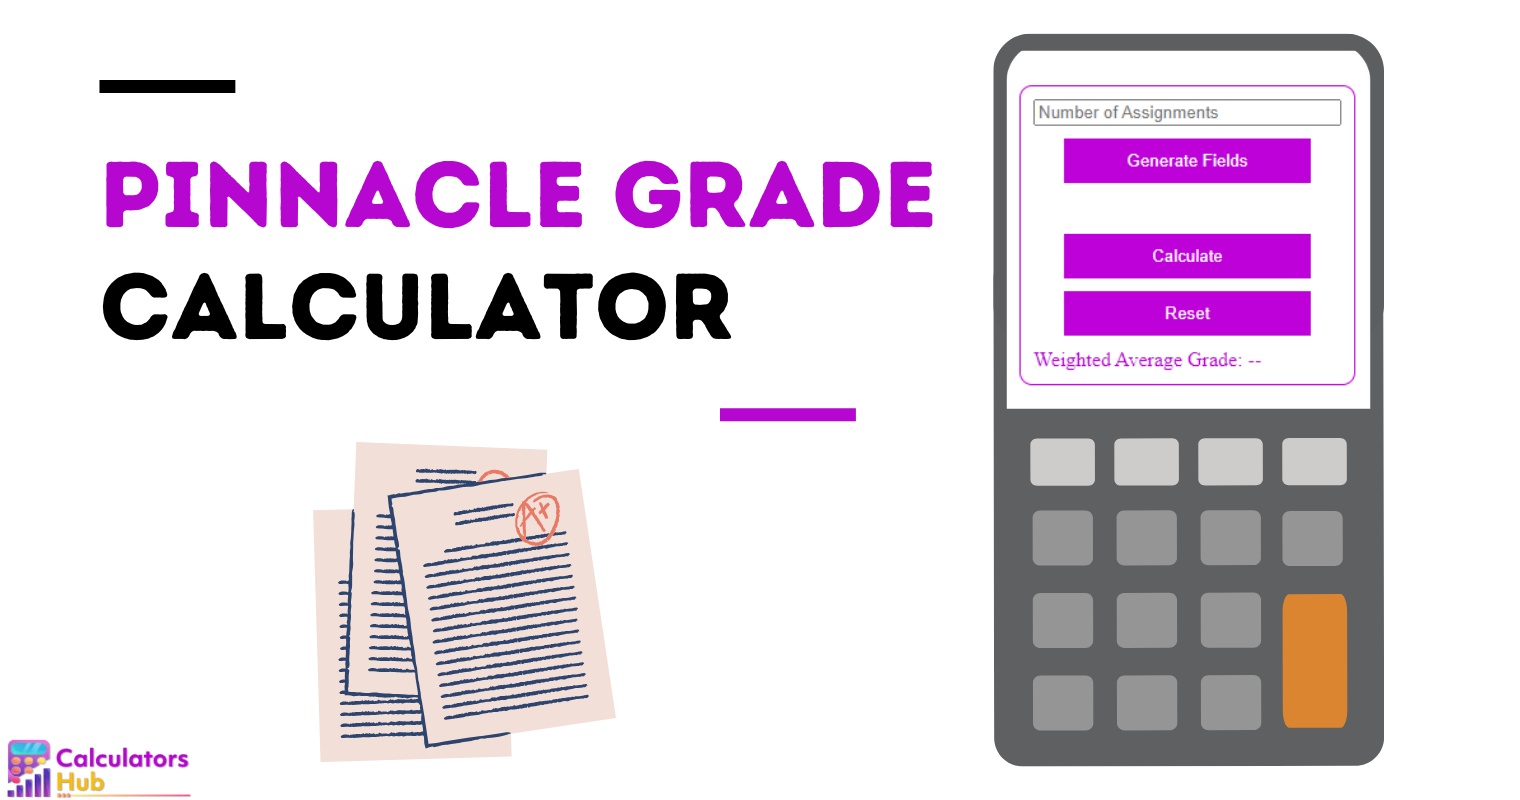 Pinnacle Grade Calculator